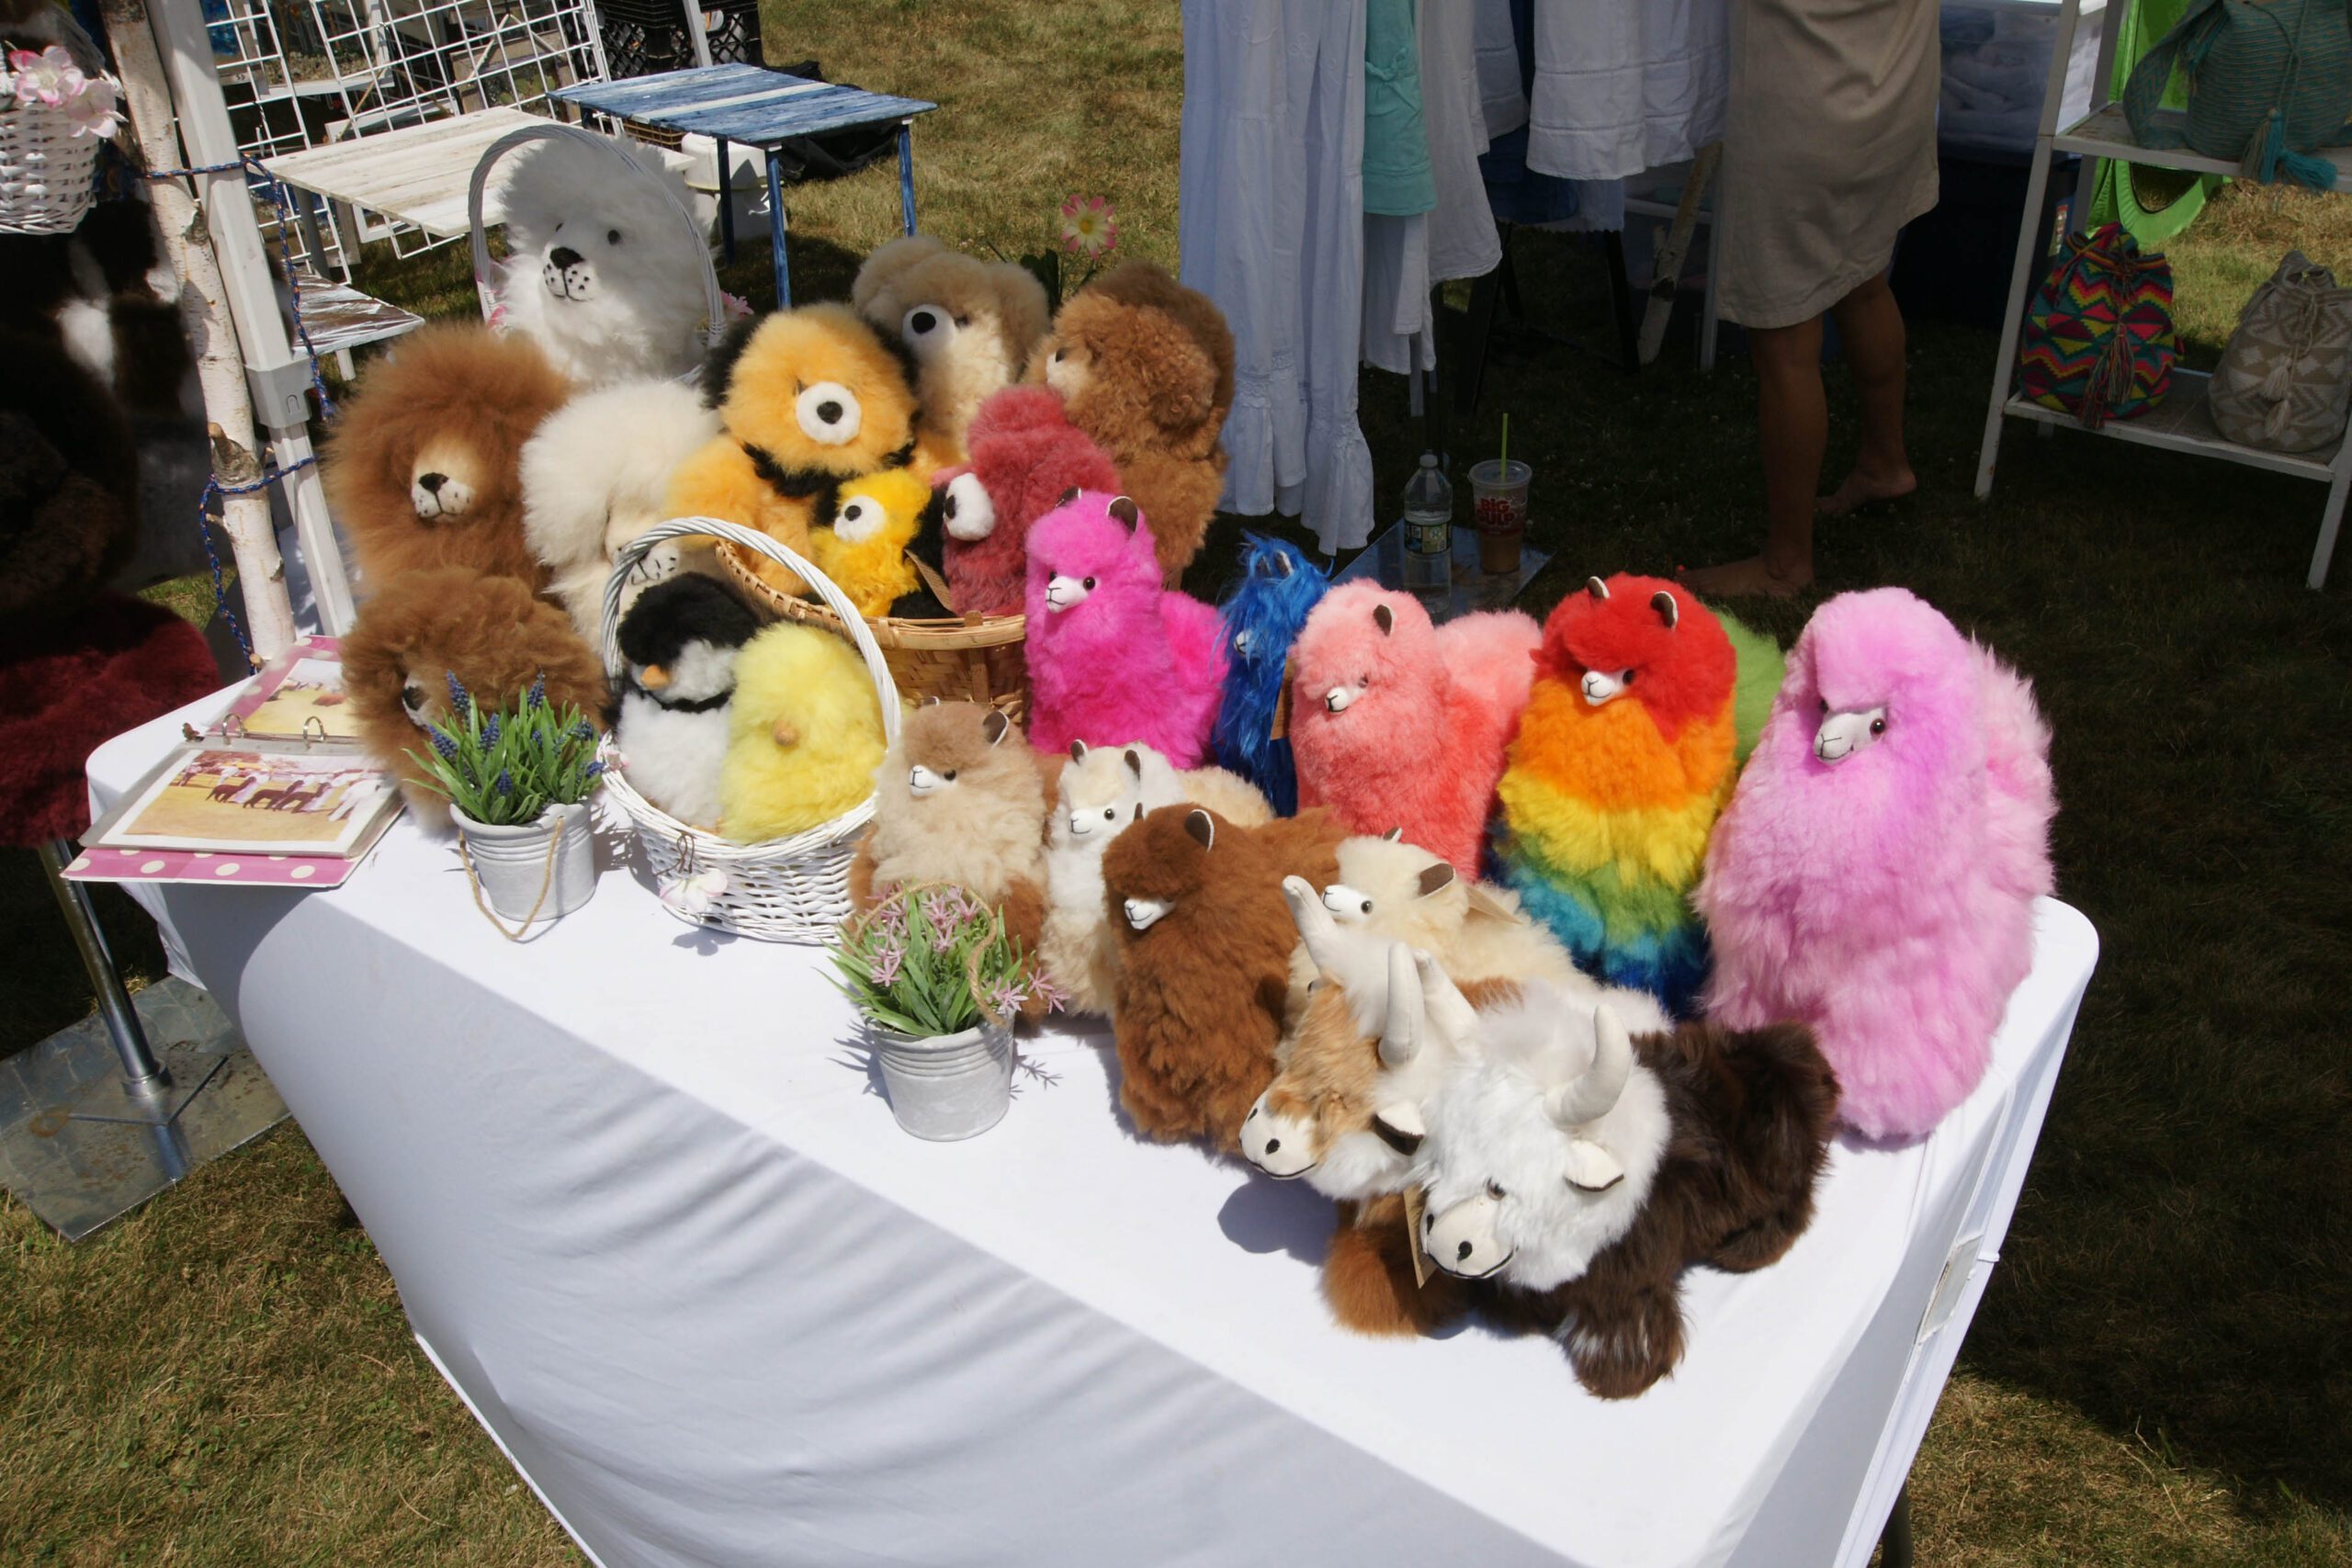 Craft Fair merchandise, stuffed animals